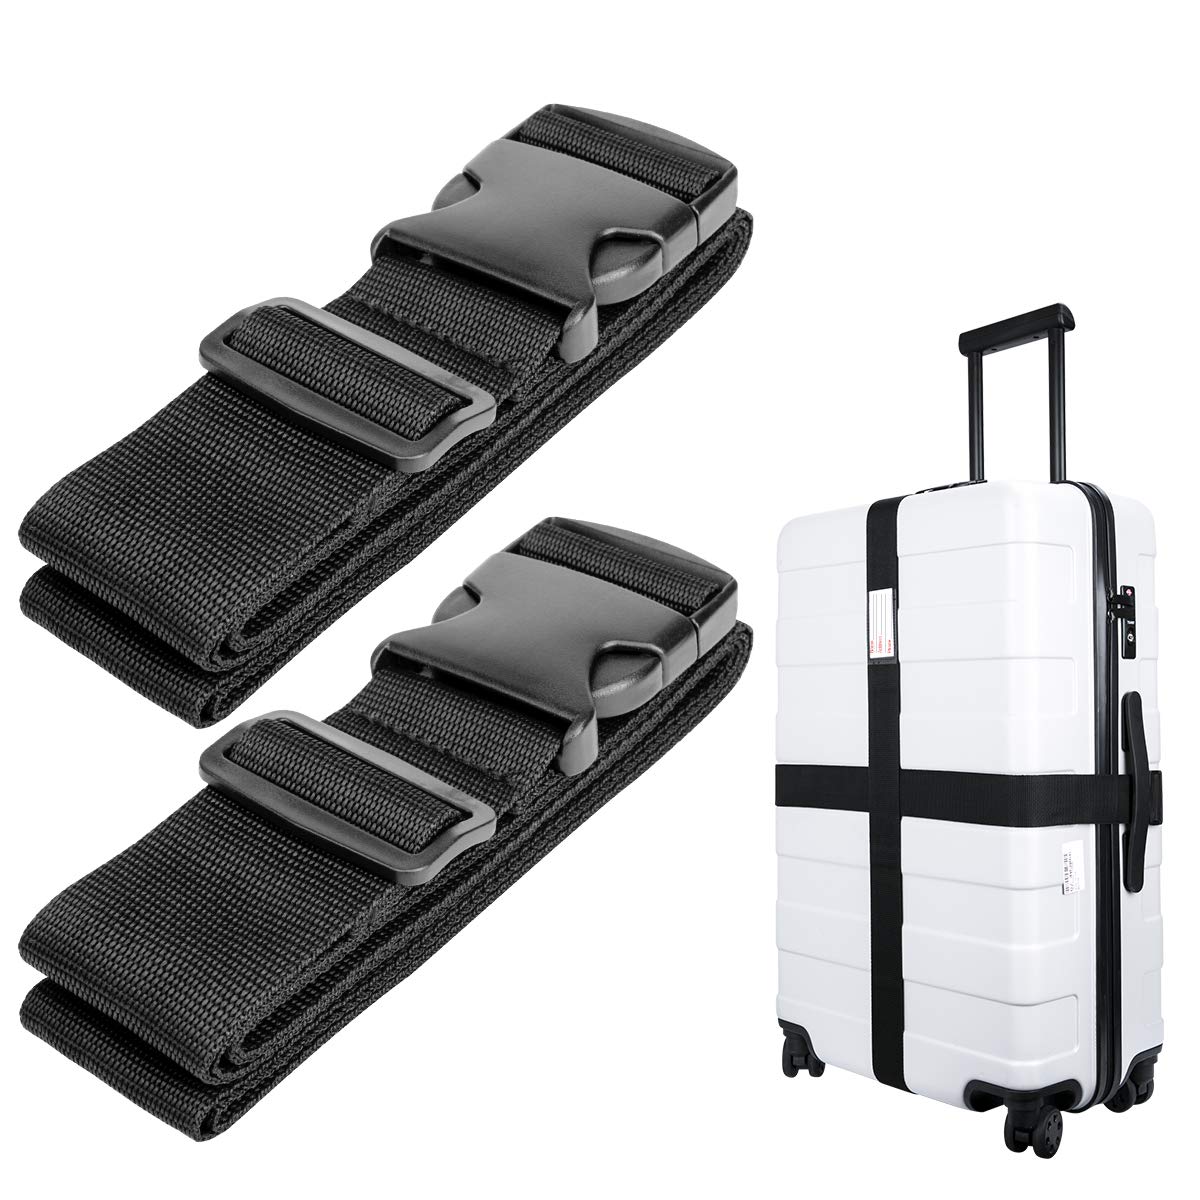 【Luxebell】スーツケースベルト ワンタッチ式